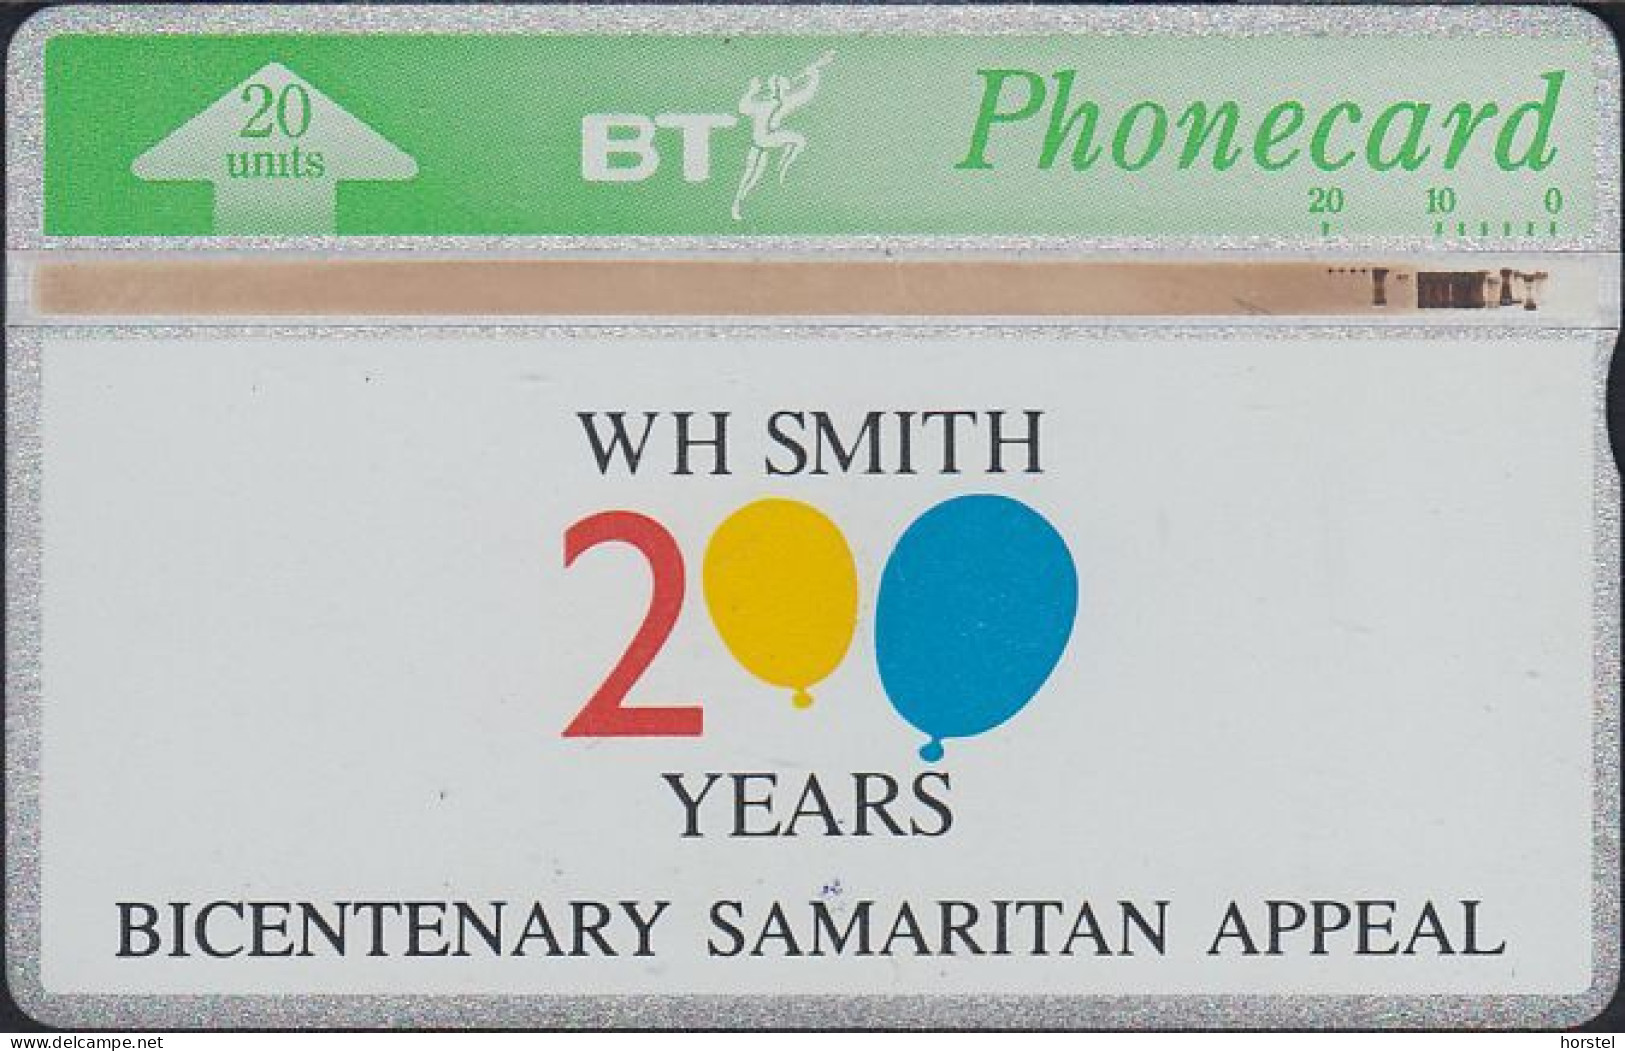 UK Bta 042 W.H. Smith Samaritan Appeal - 227E - BT Advertising Issues